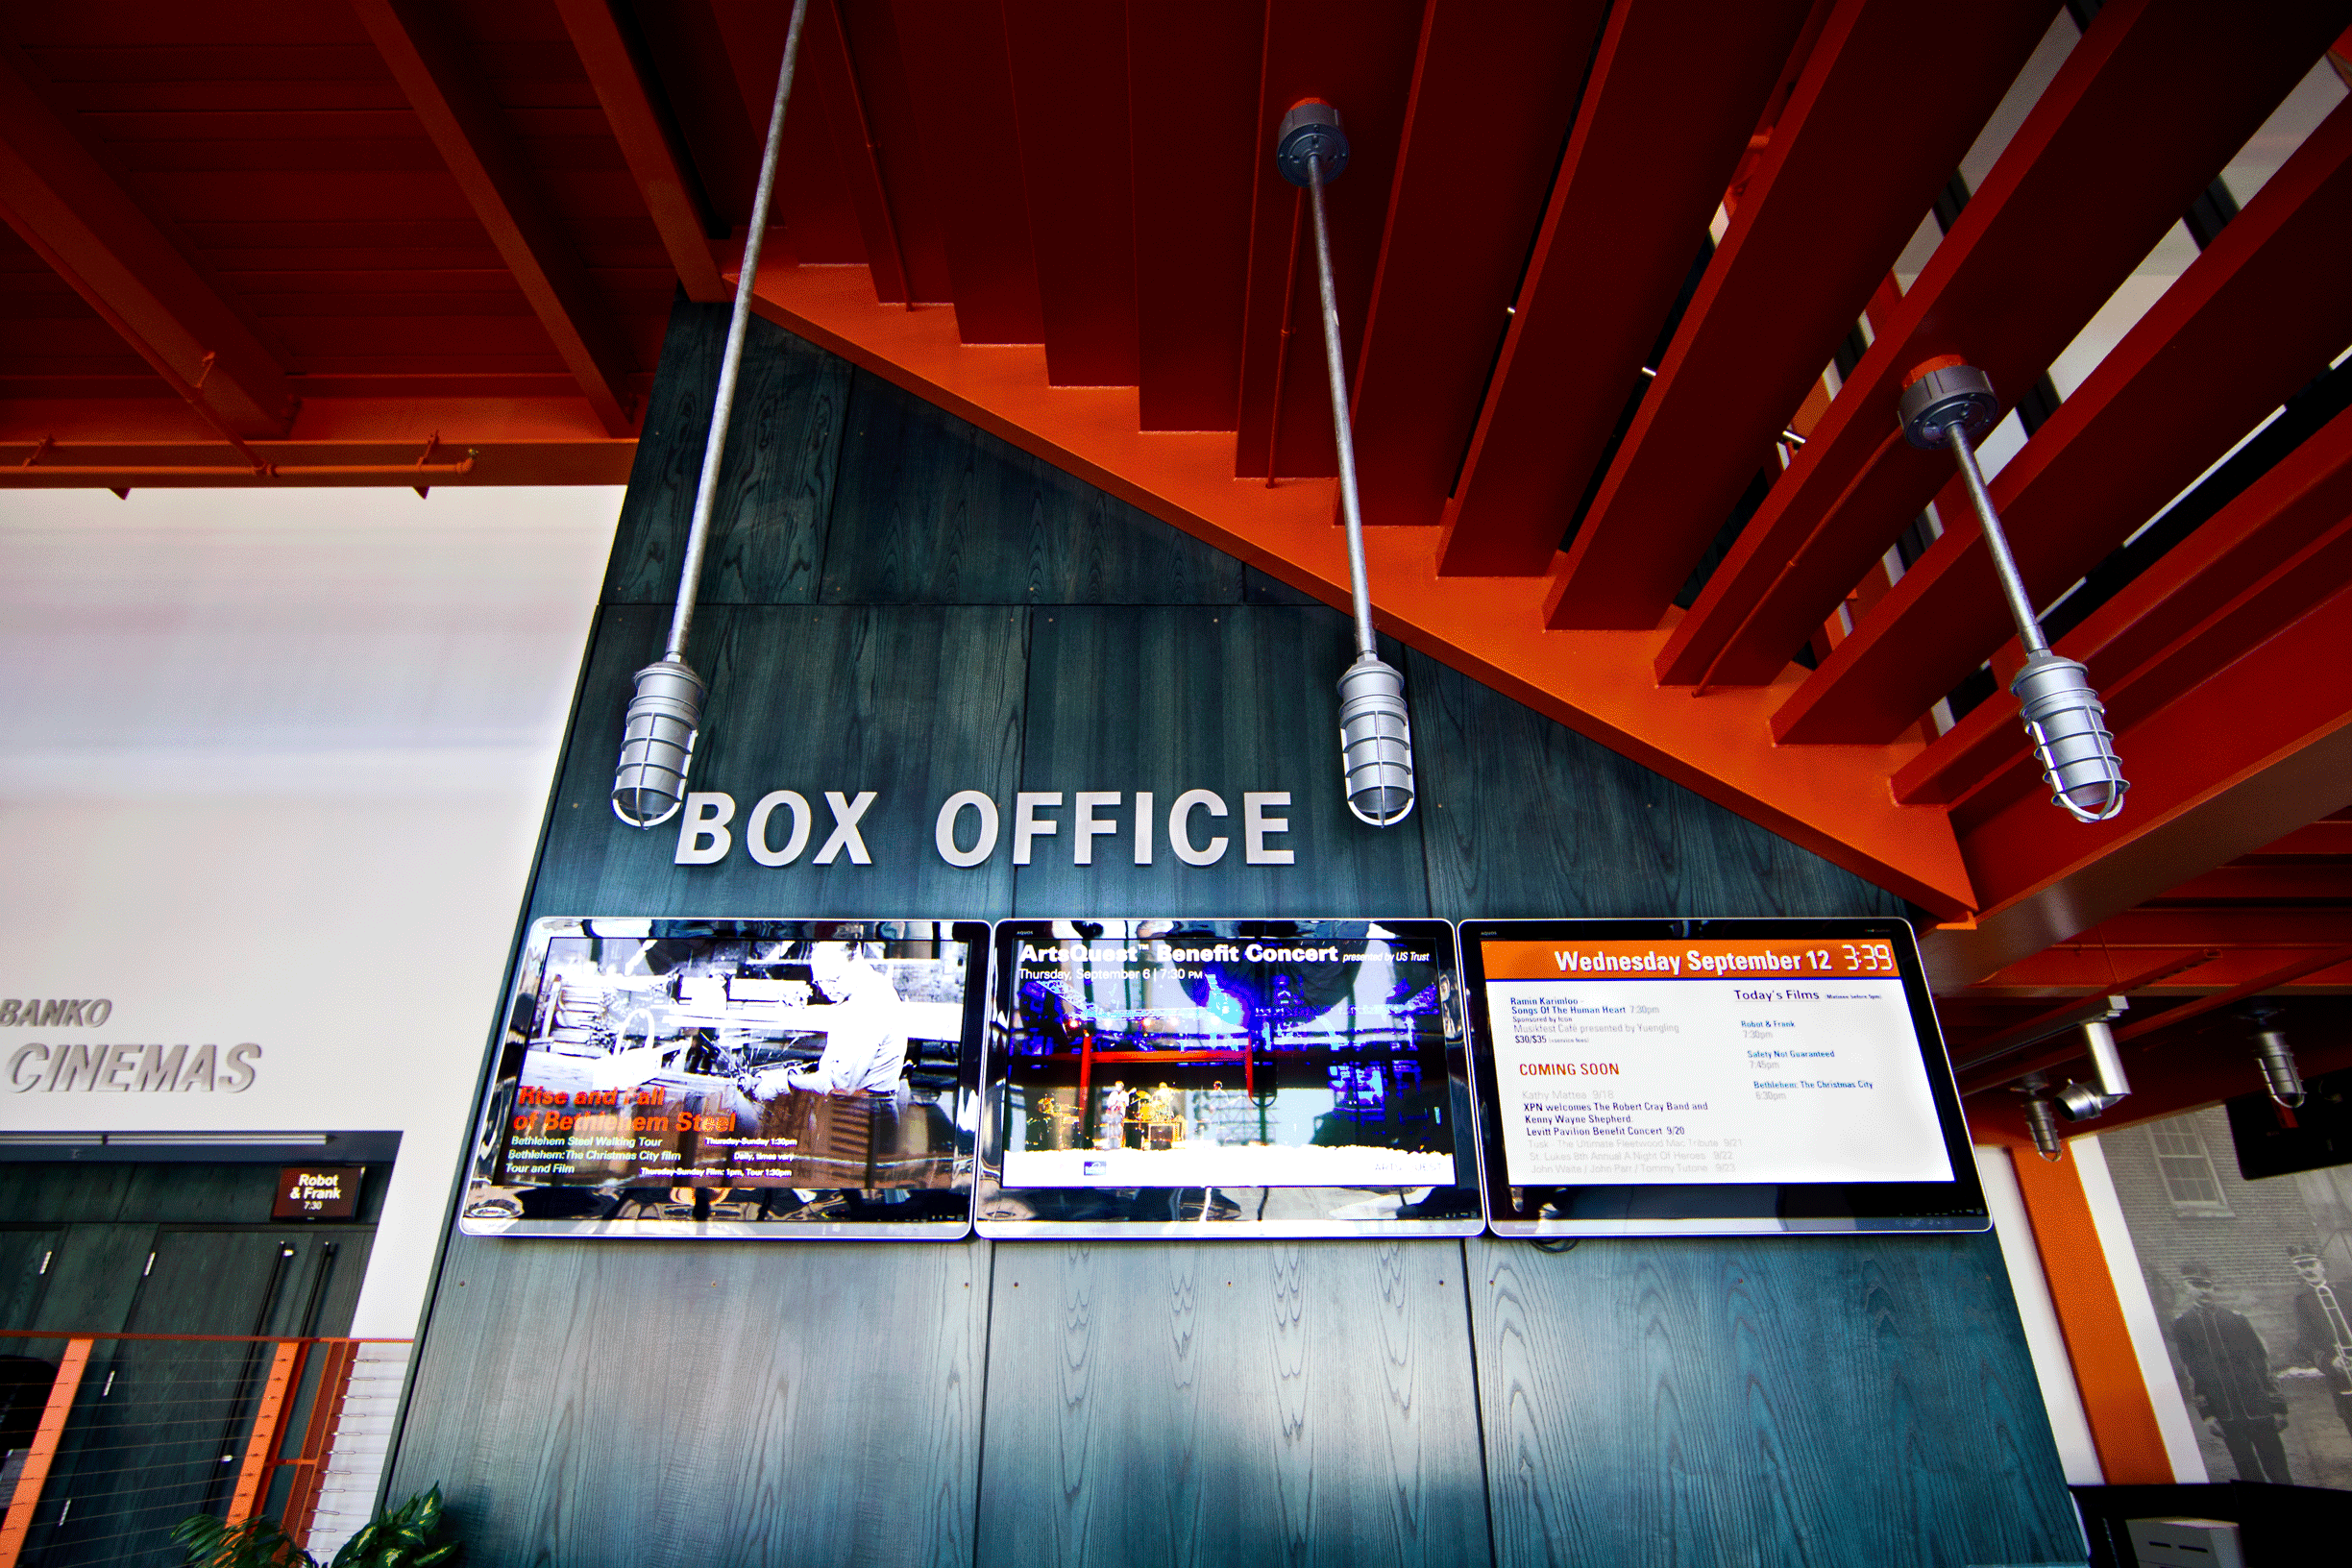 box office digital signage